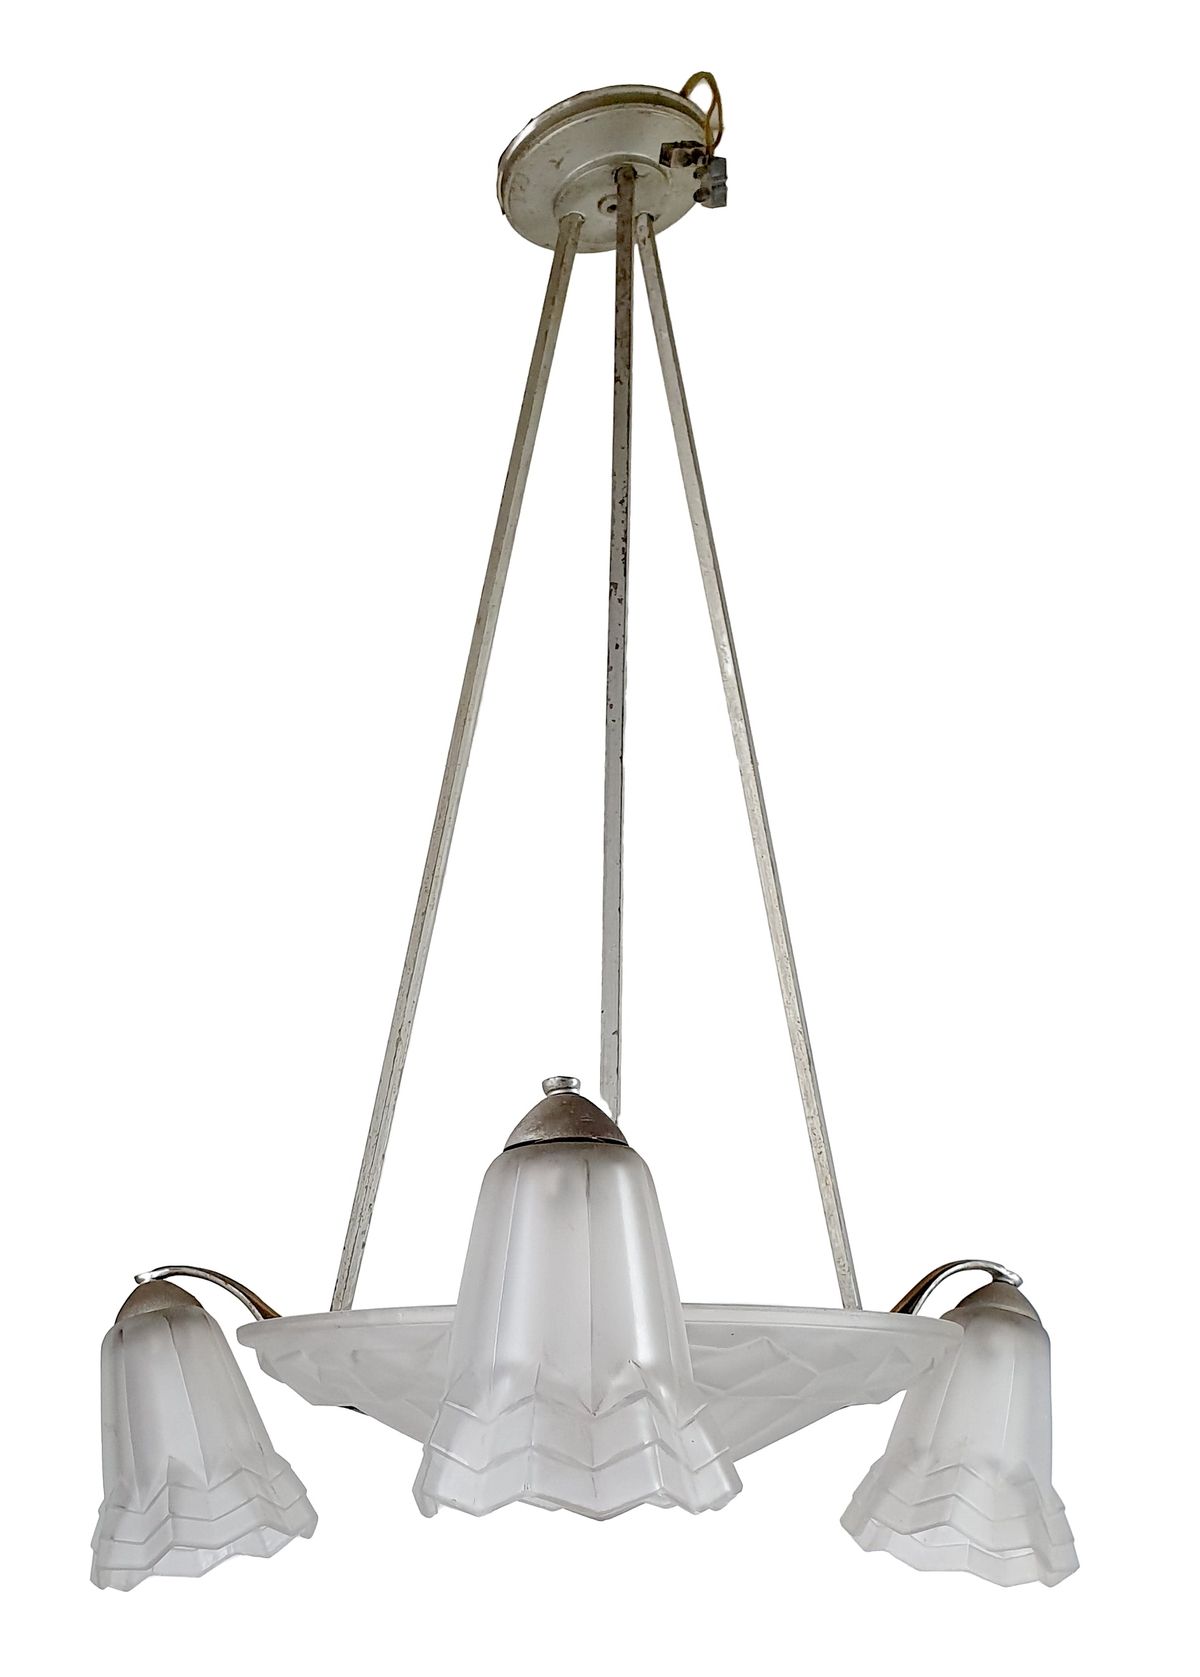 DAVID GUERON dit DEGUE (1892-1950), attribué 优雅的Art-Deco吊灯，约1925年
在不透明的玻璃上切割出一个几&hellip;